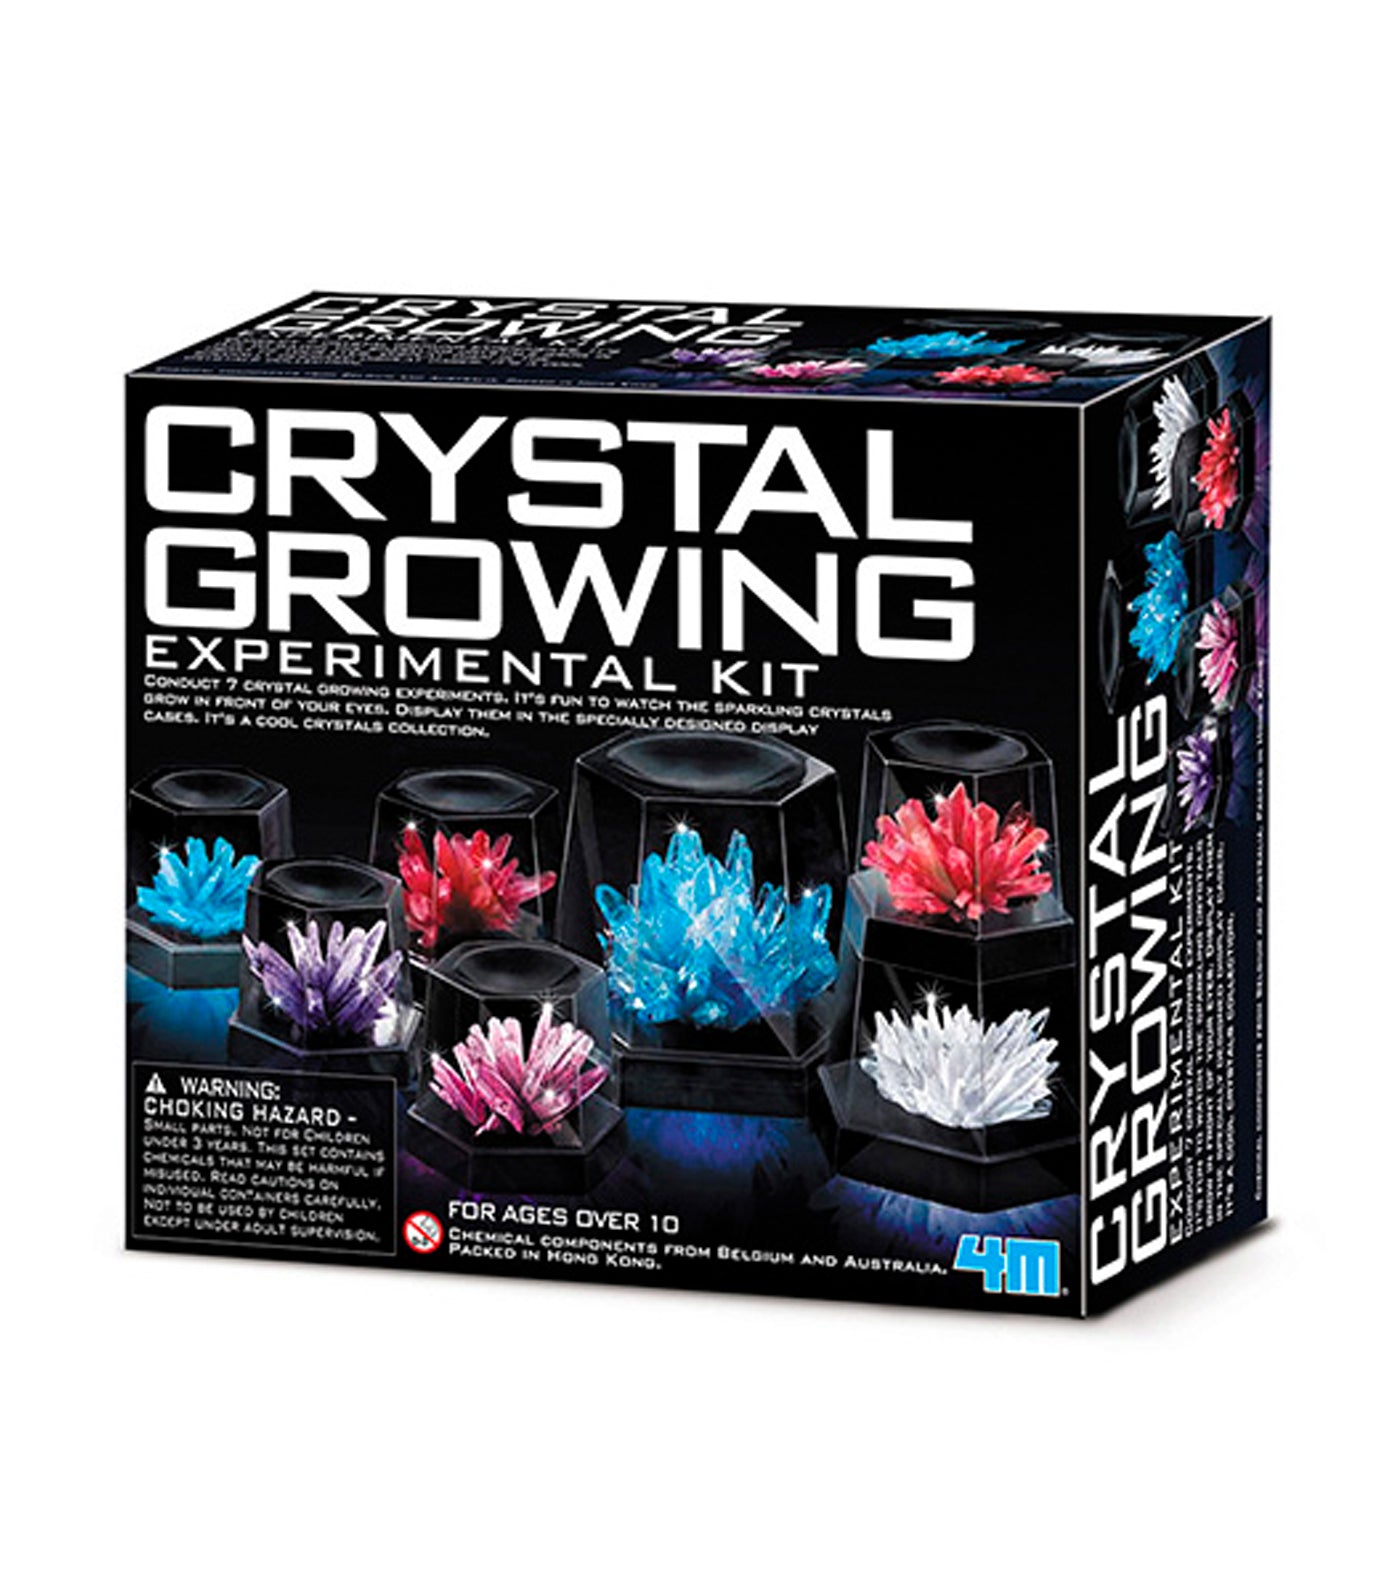 4m crystal growing experimental kit